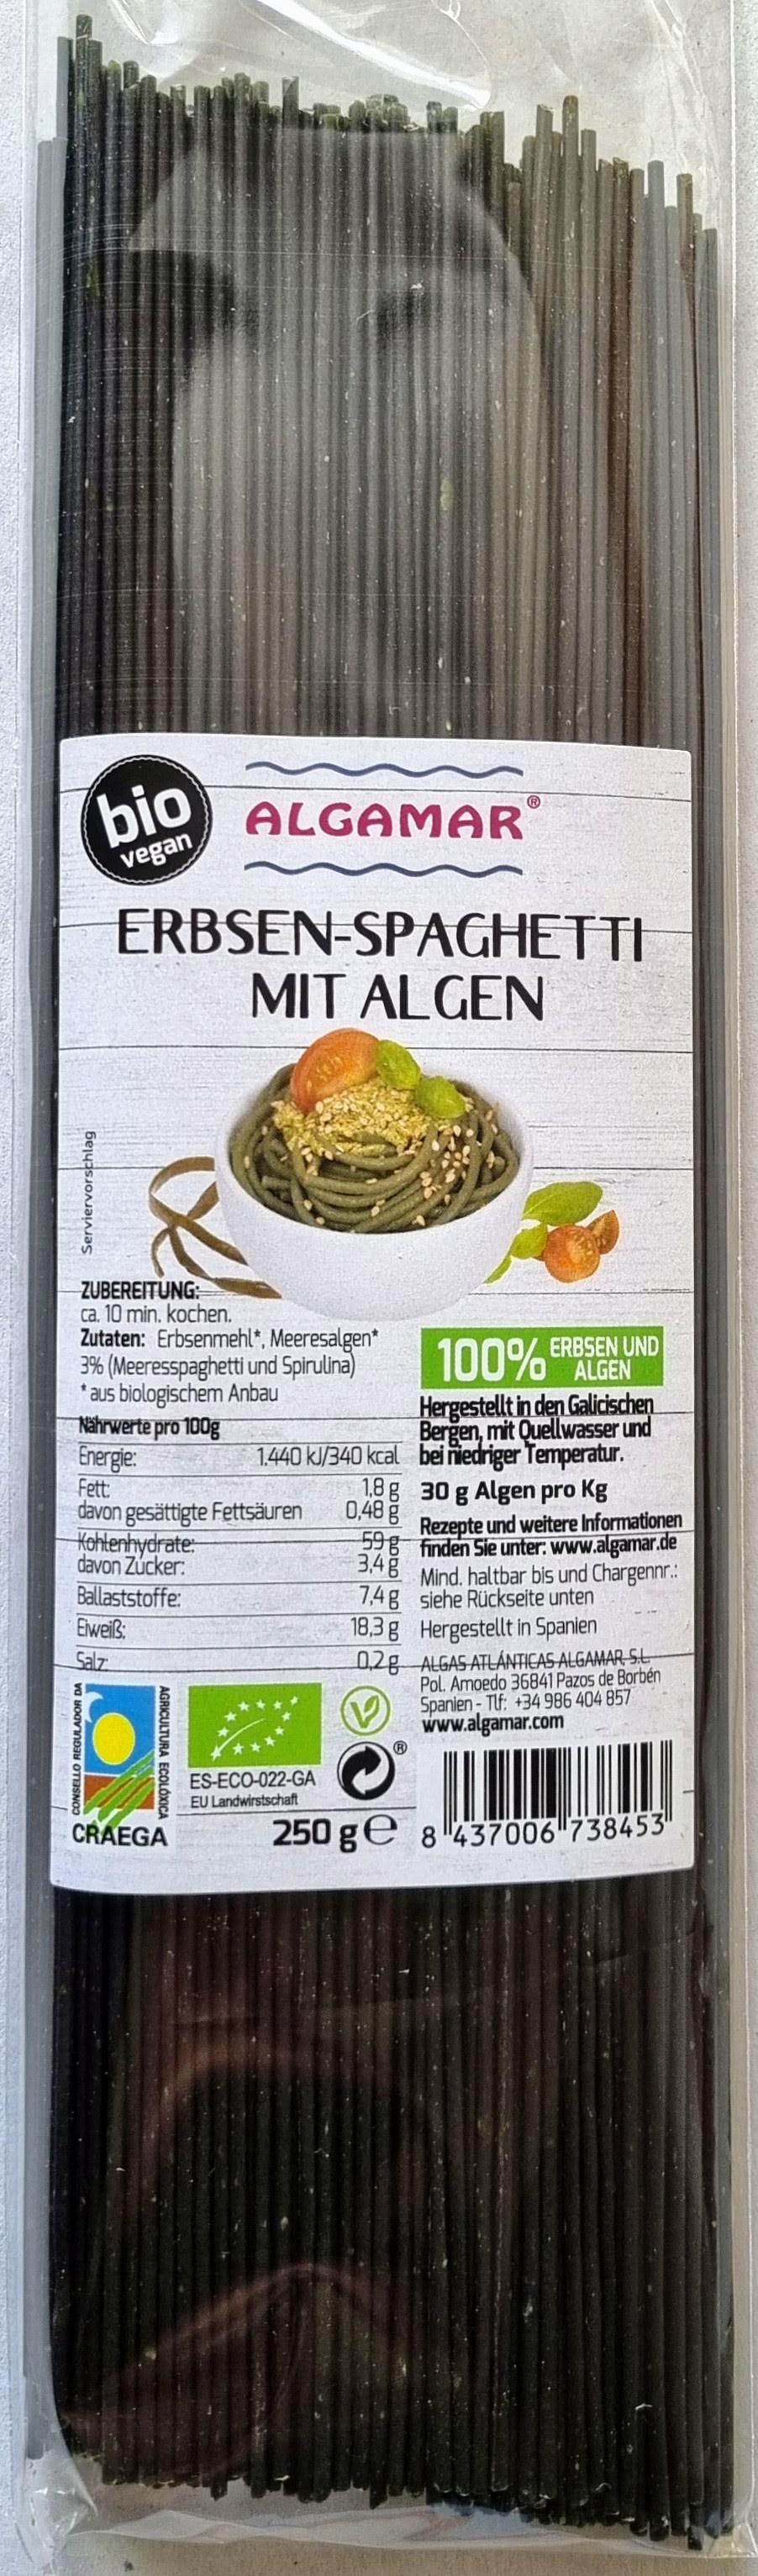 Erbsen-Spaghetti mit Algen